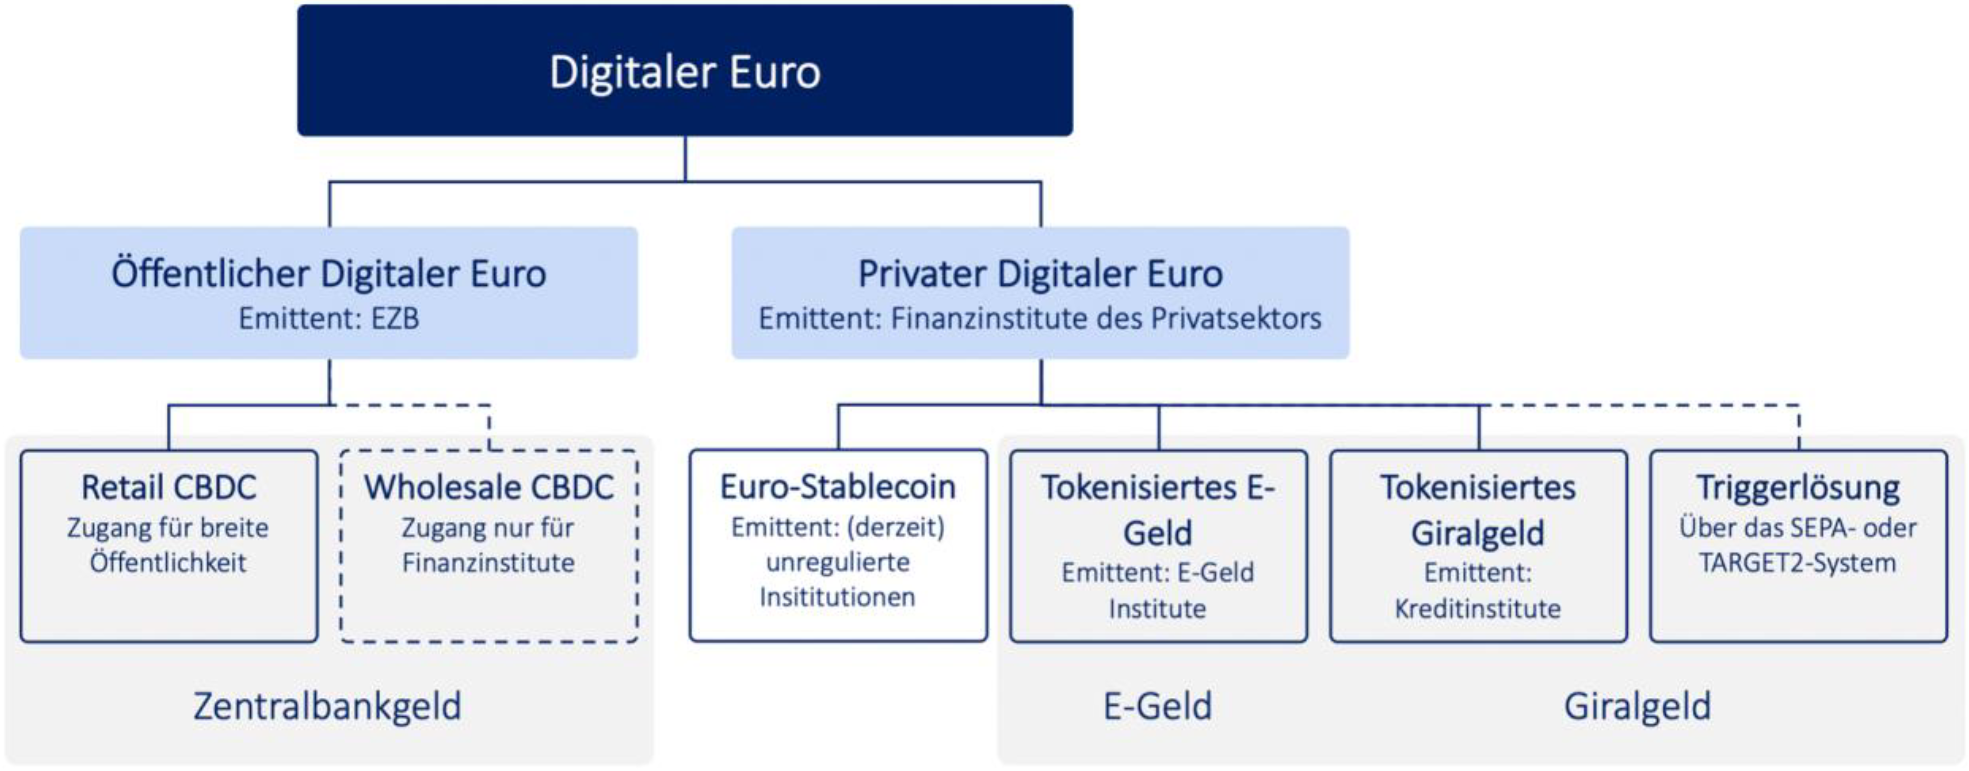 Taxonomie des digitalen Euro